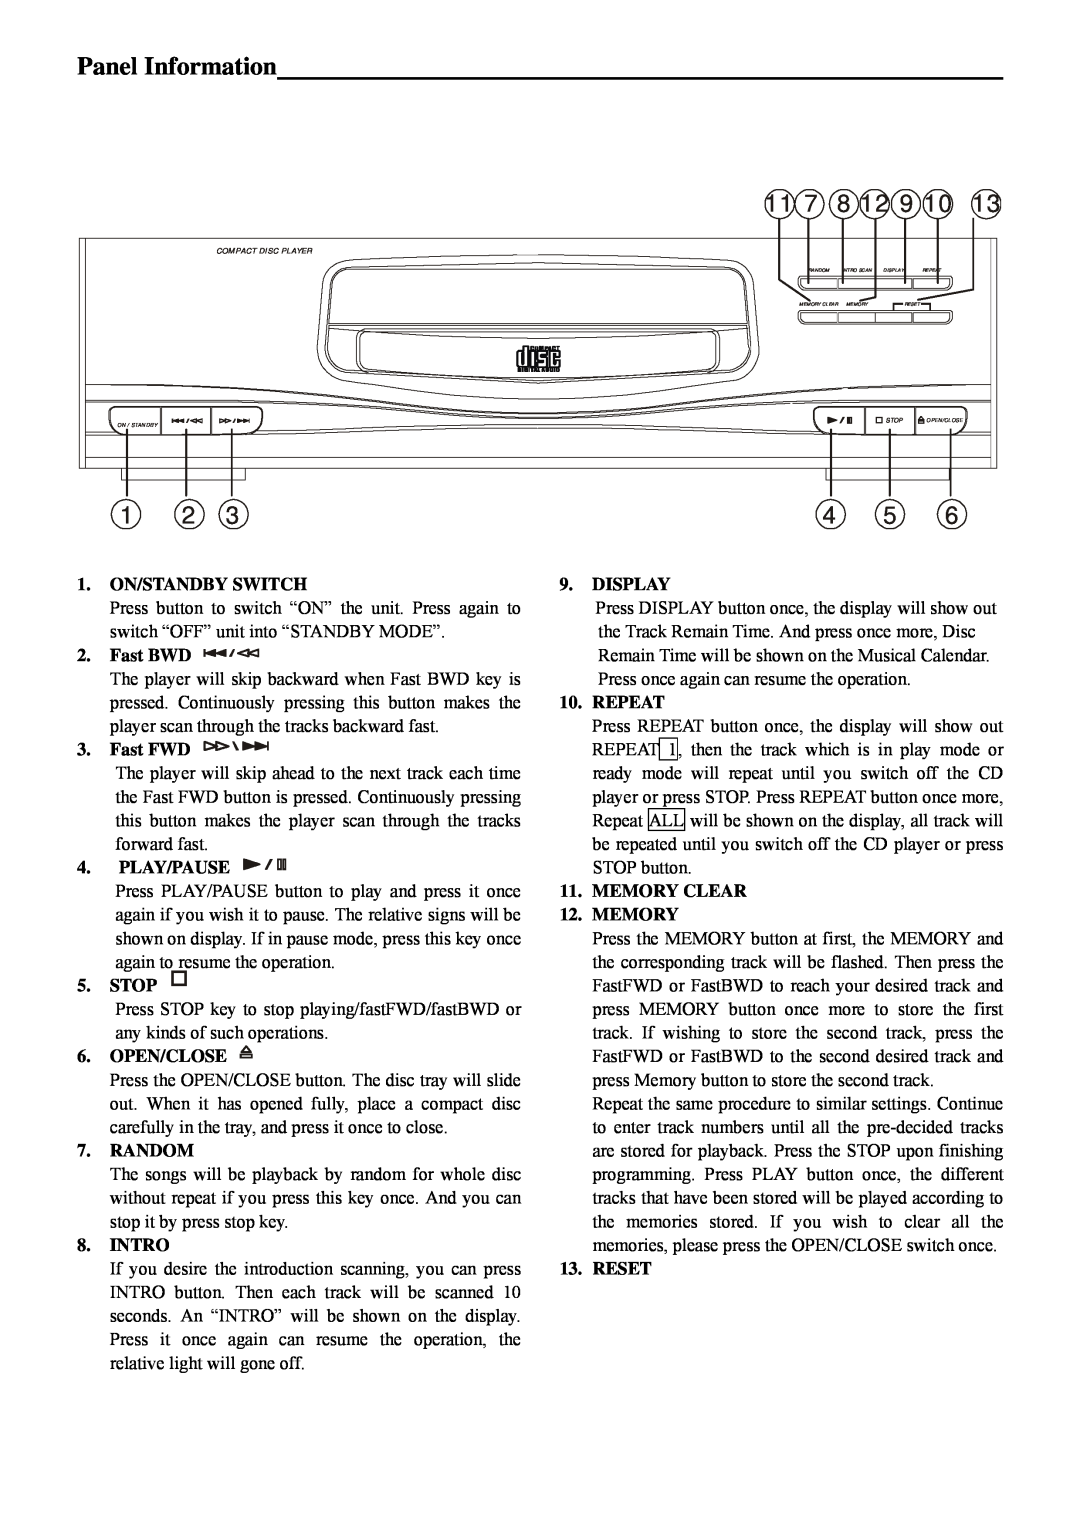 Radio Shack PT-668C manual Panel Information, On/Standby Switch, Display 